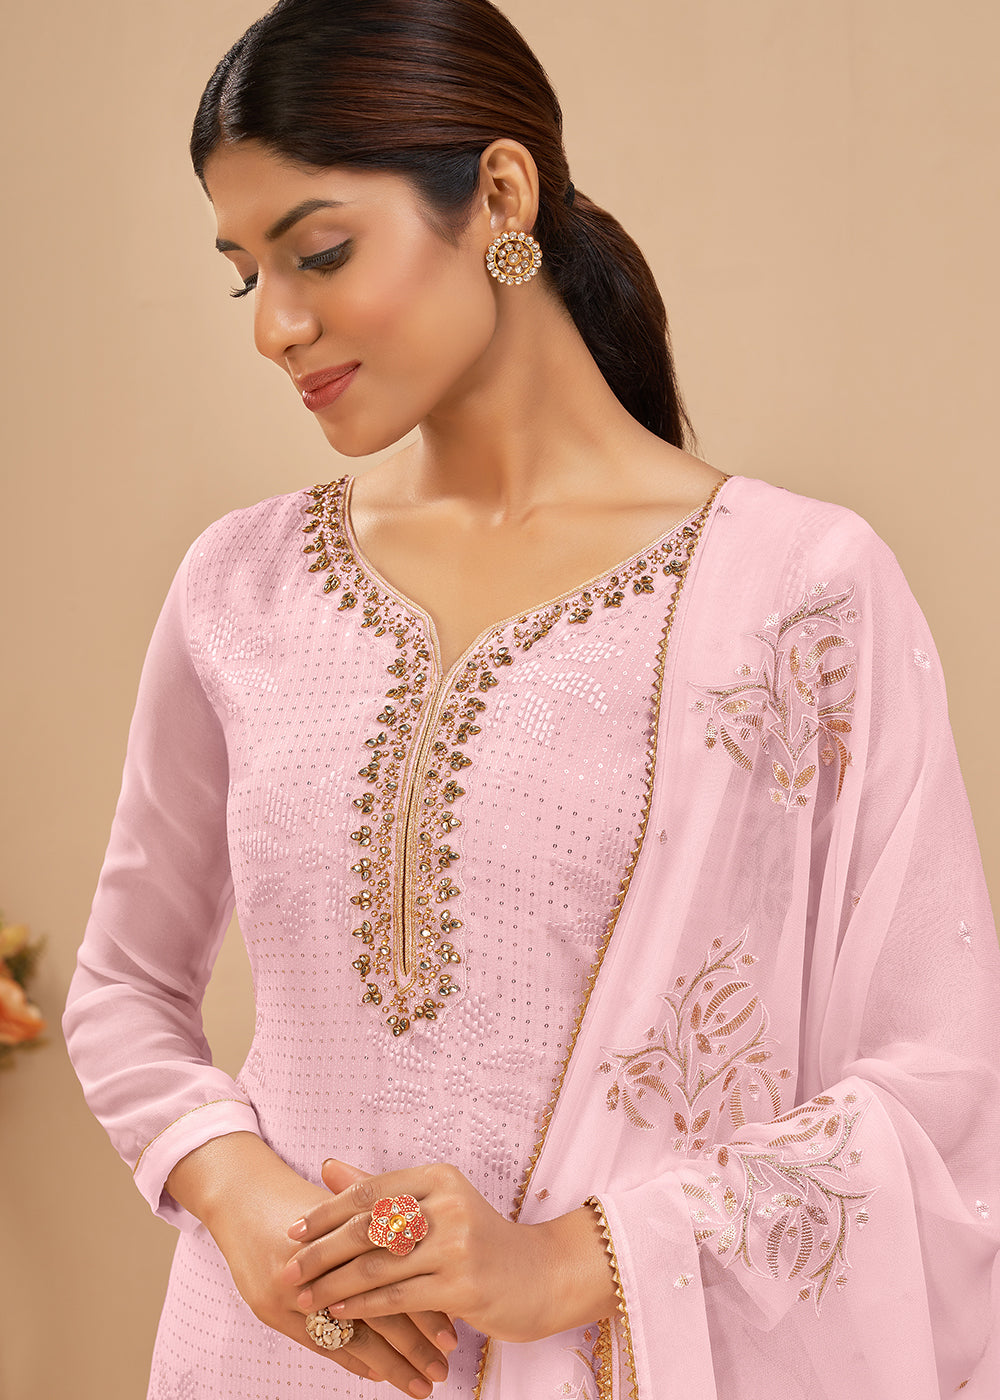 Buy Now Radiant Pink Sequins & Khatli Work Festive Palazzo Salwar Suit Online in USA, UK, Canada, Germany, Australia & Worldwide at Empress Clothing. 